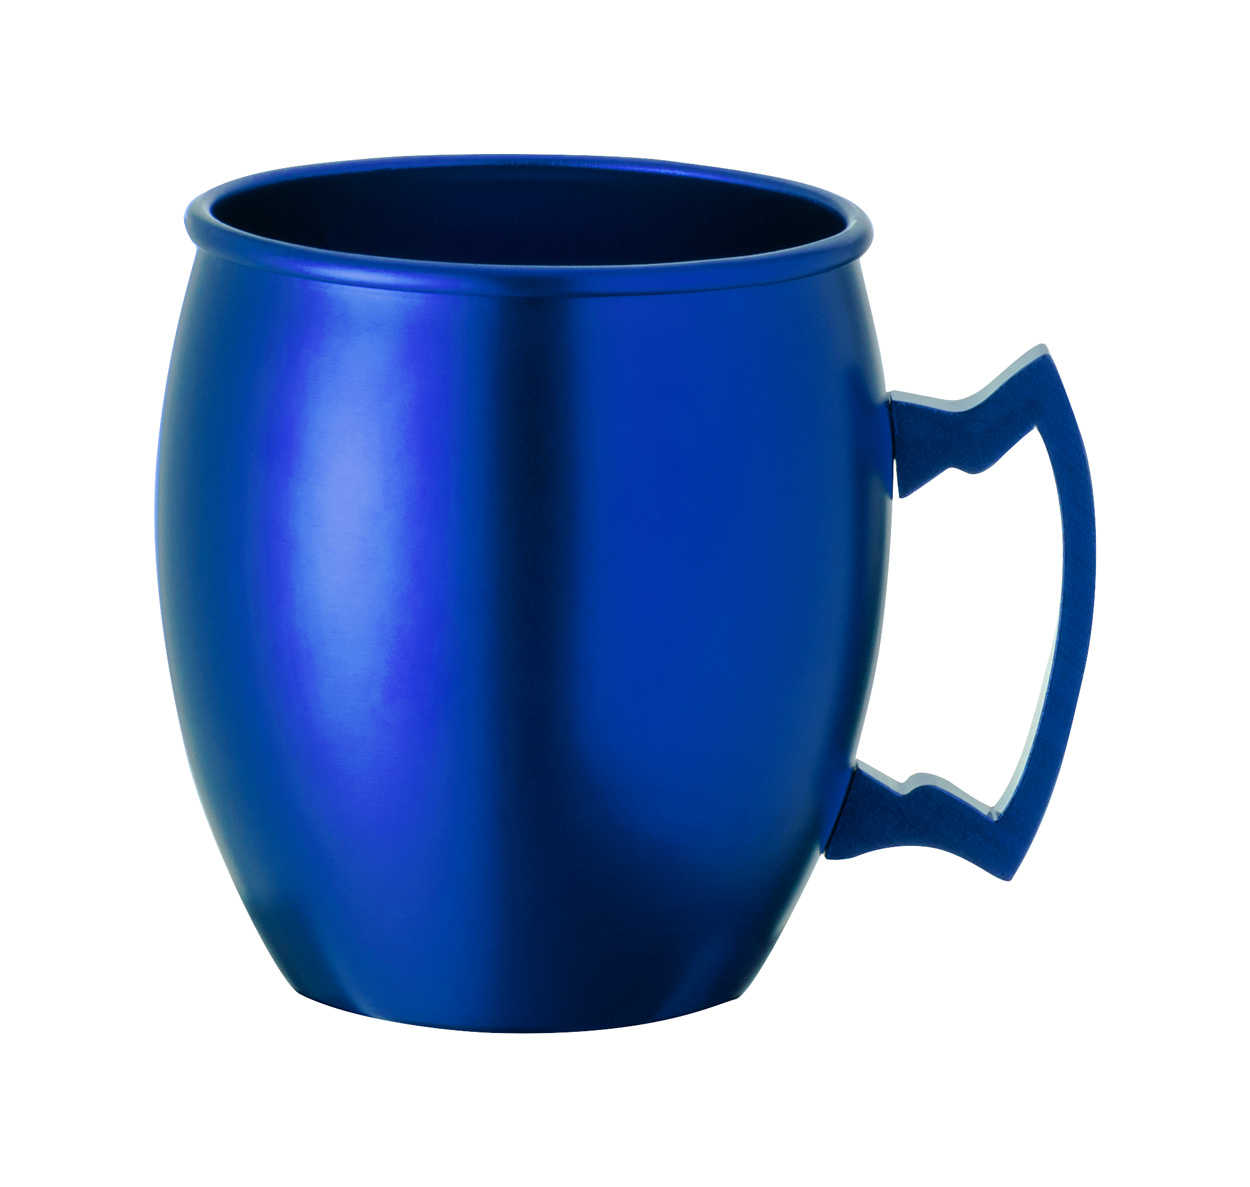 Ashley mug - blue